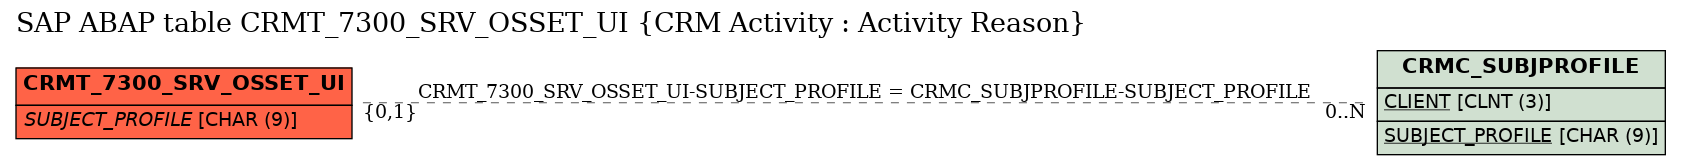 E-R Diagram for table CRMT_7300_SRV_OSSET_UI (CRM Activity : Activity Reason)